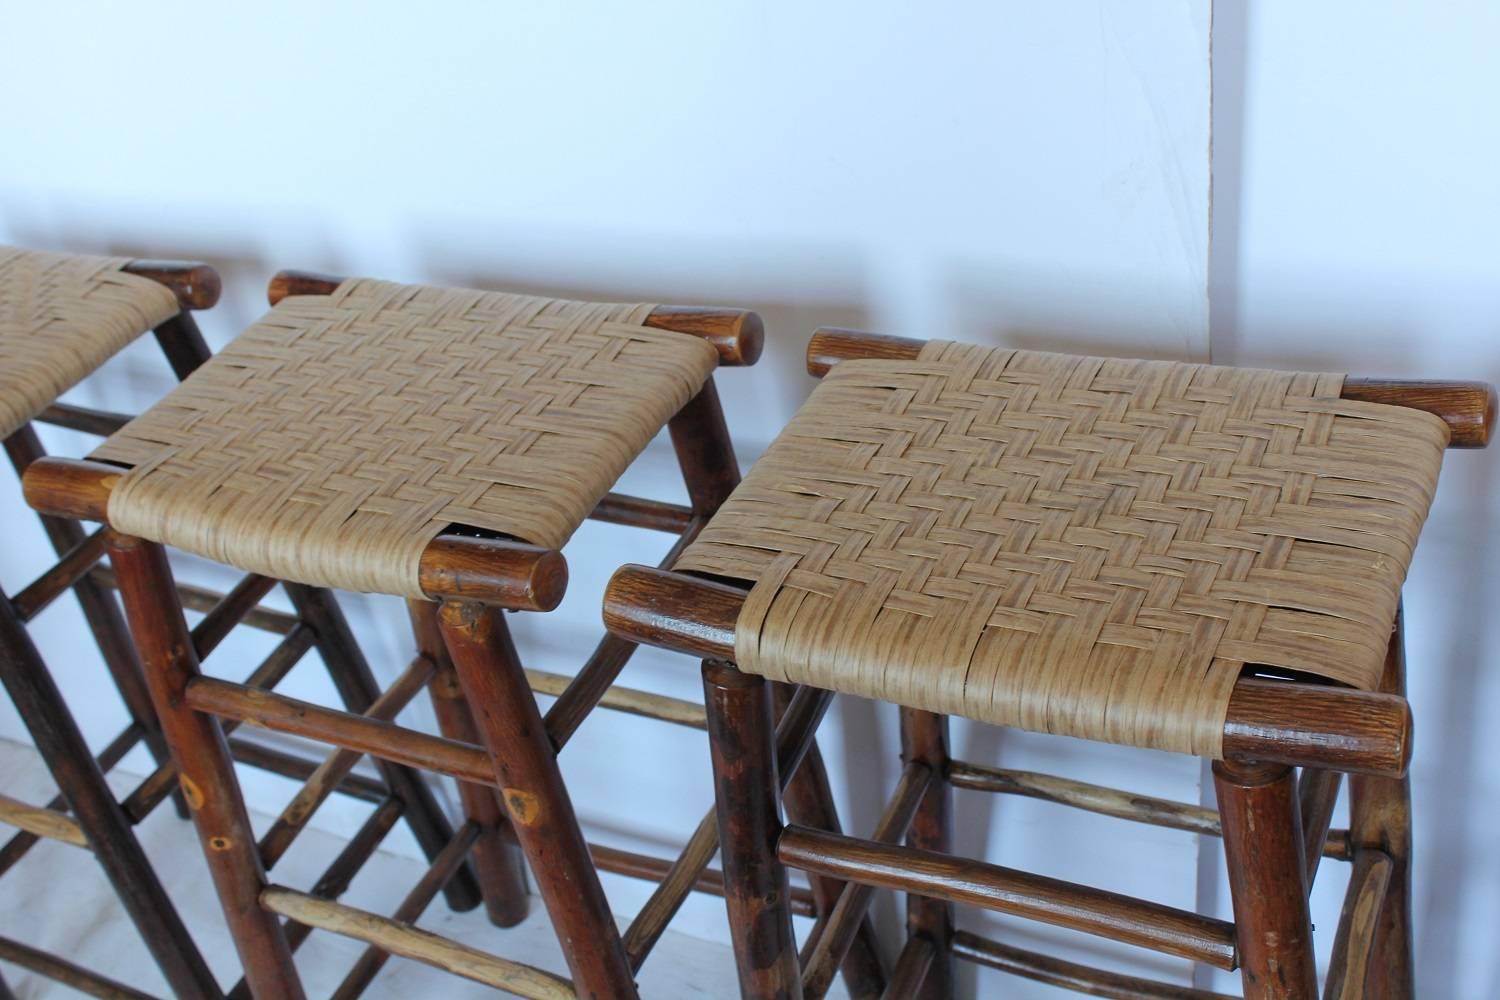 Original 1940s Adirondack bar stools with new woven seats.